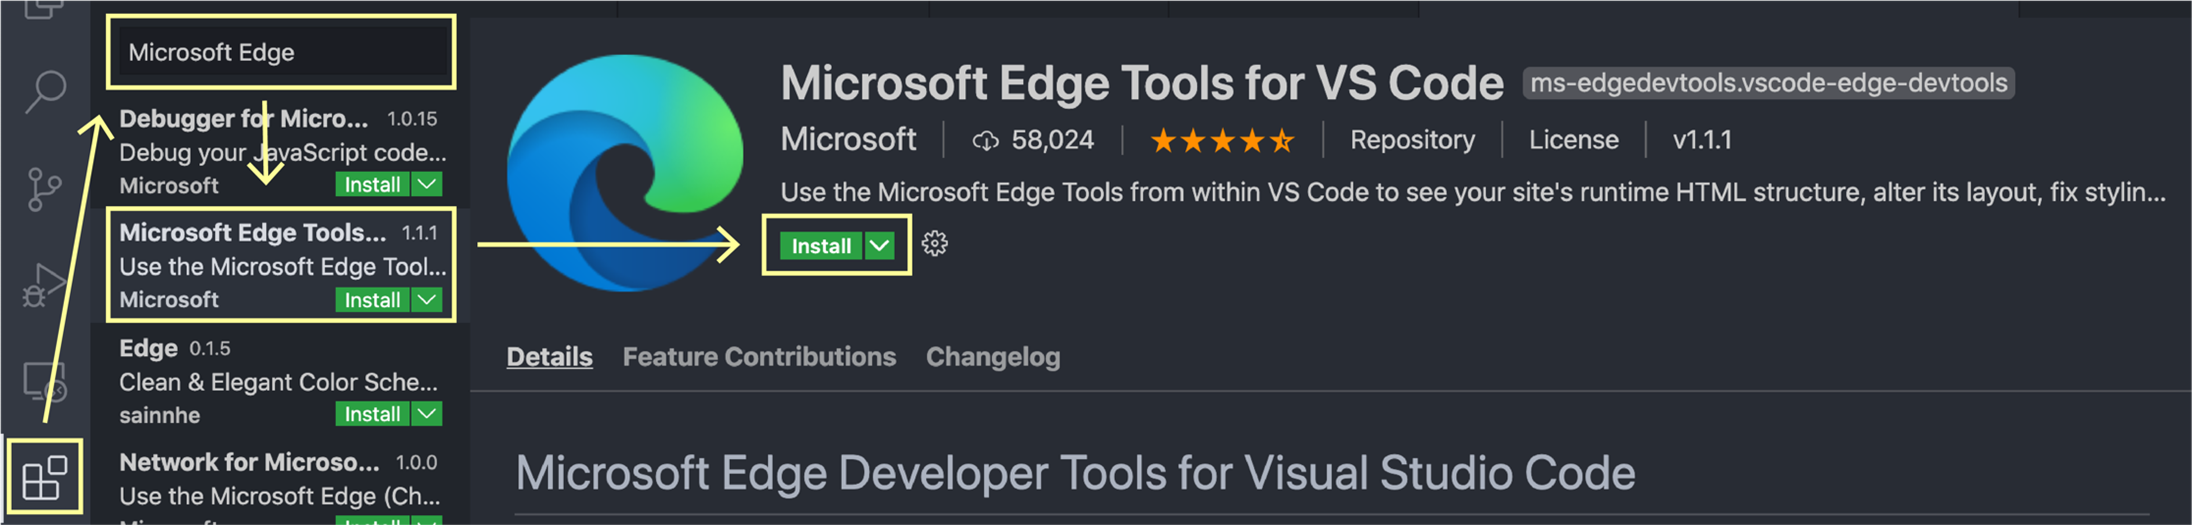 Tools In Microsoft Edge